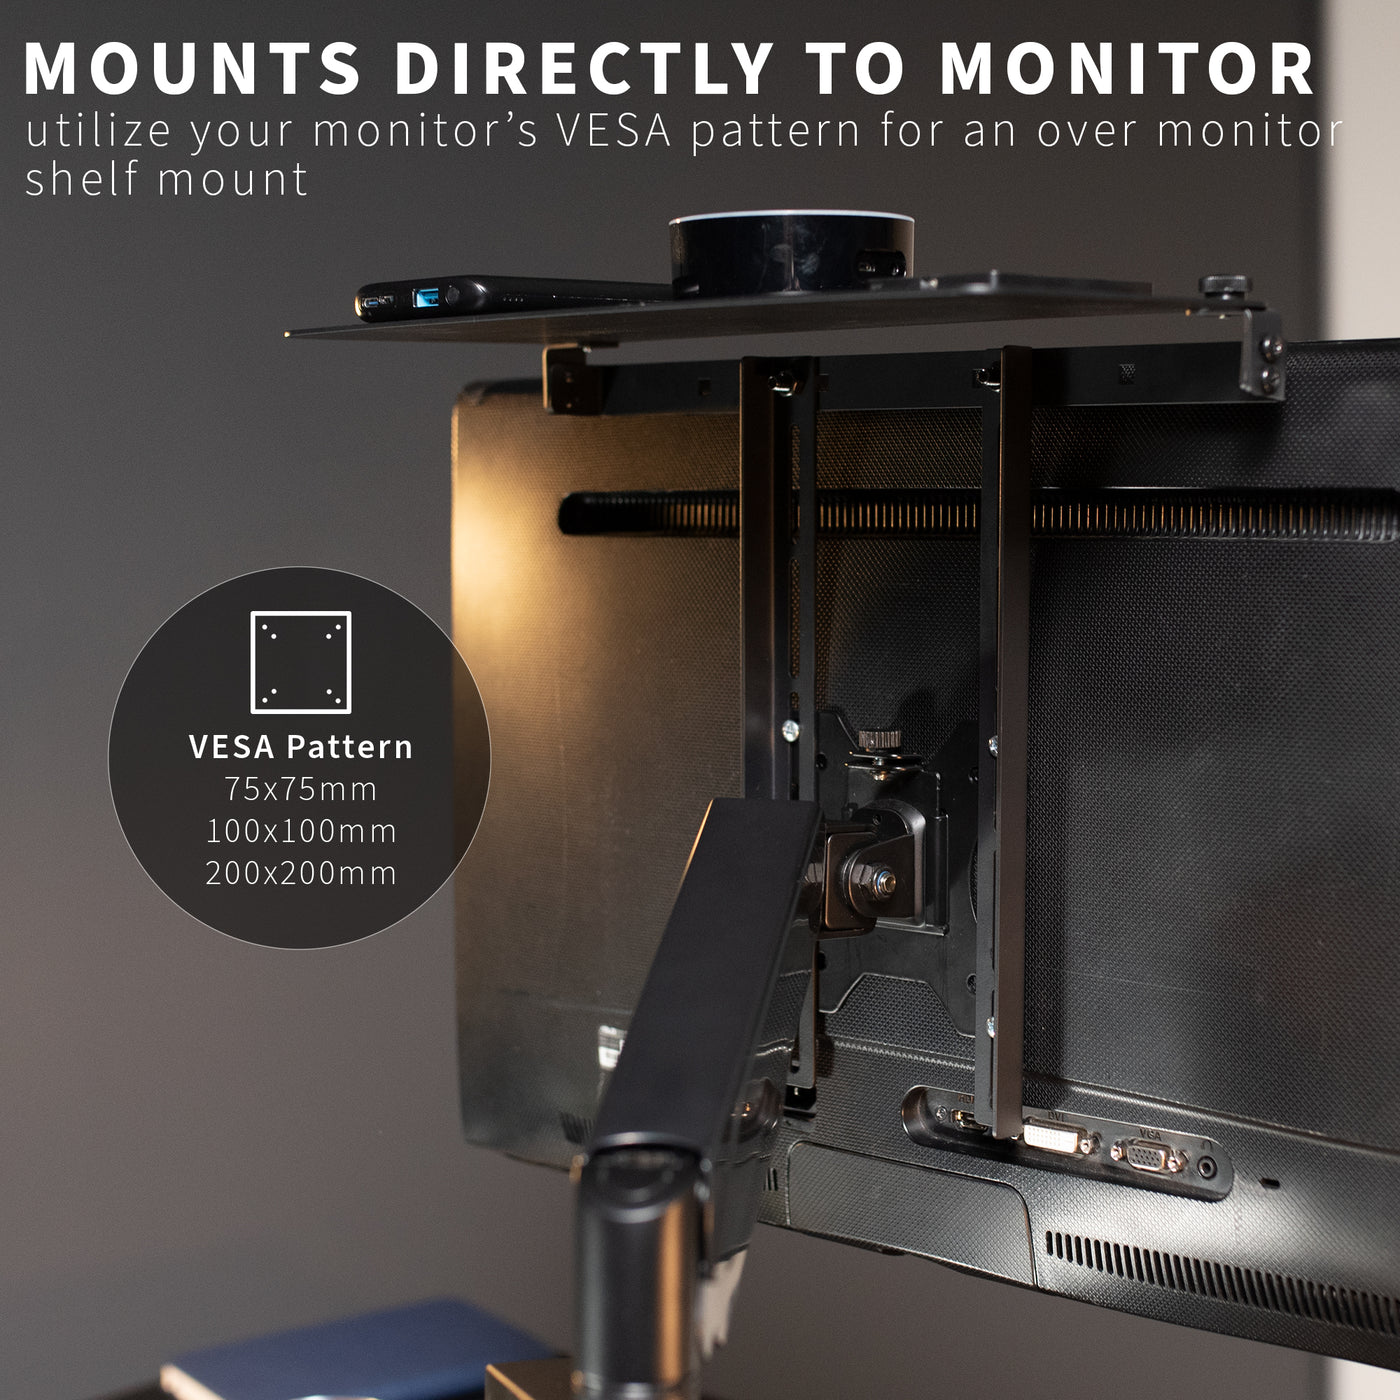 Cameo VESA Mount System, Mounting / Hardware, Monitors / Viewing, Buy